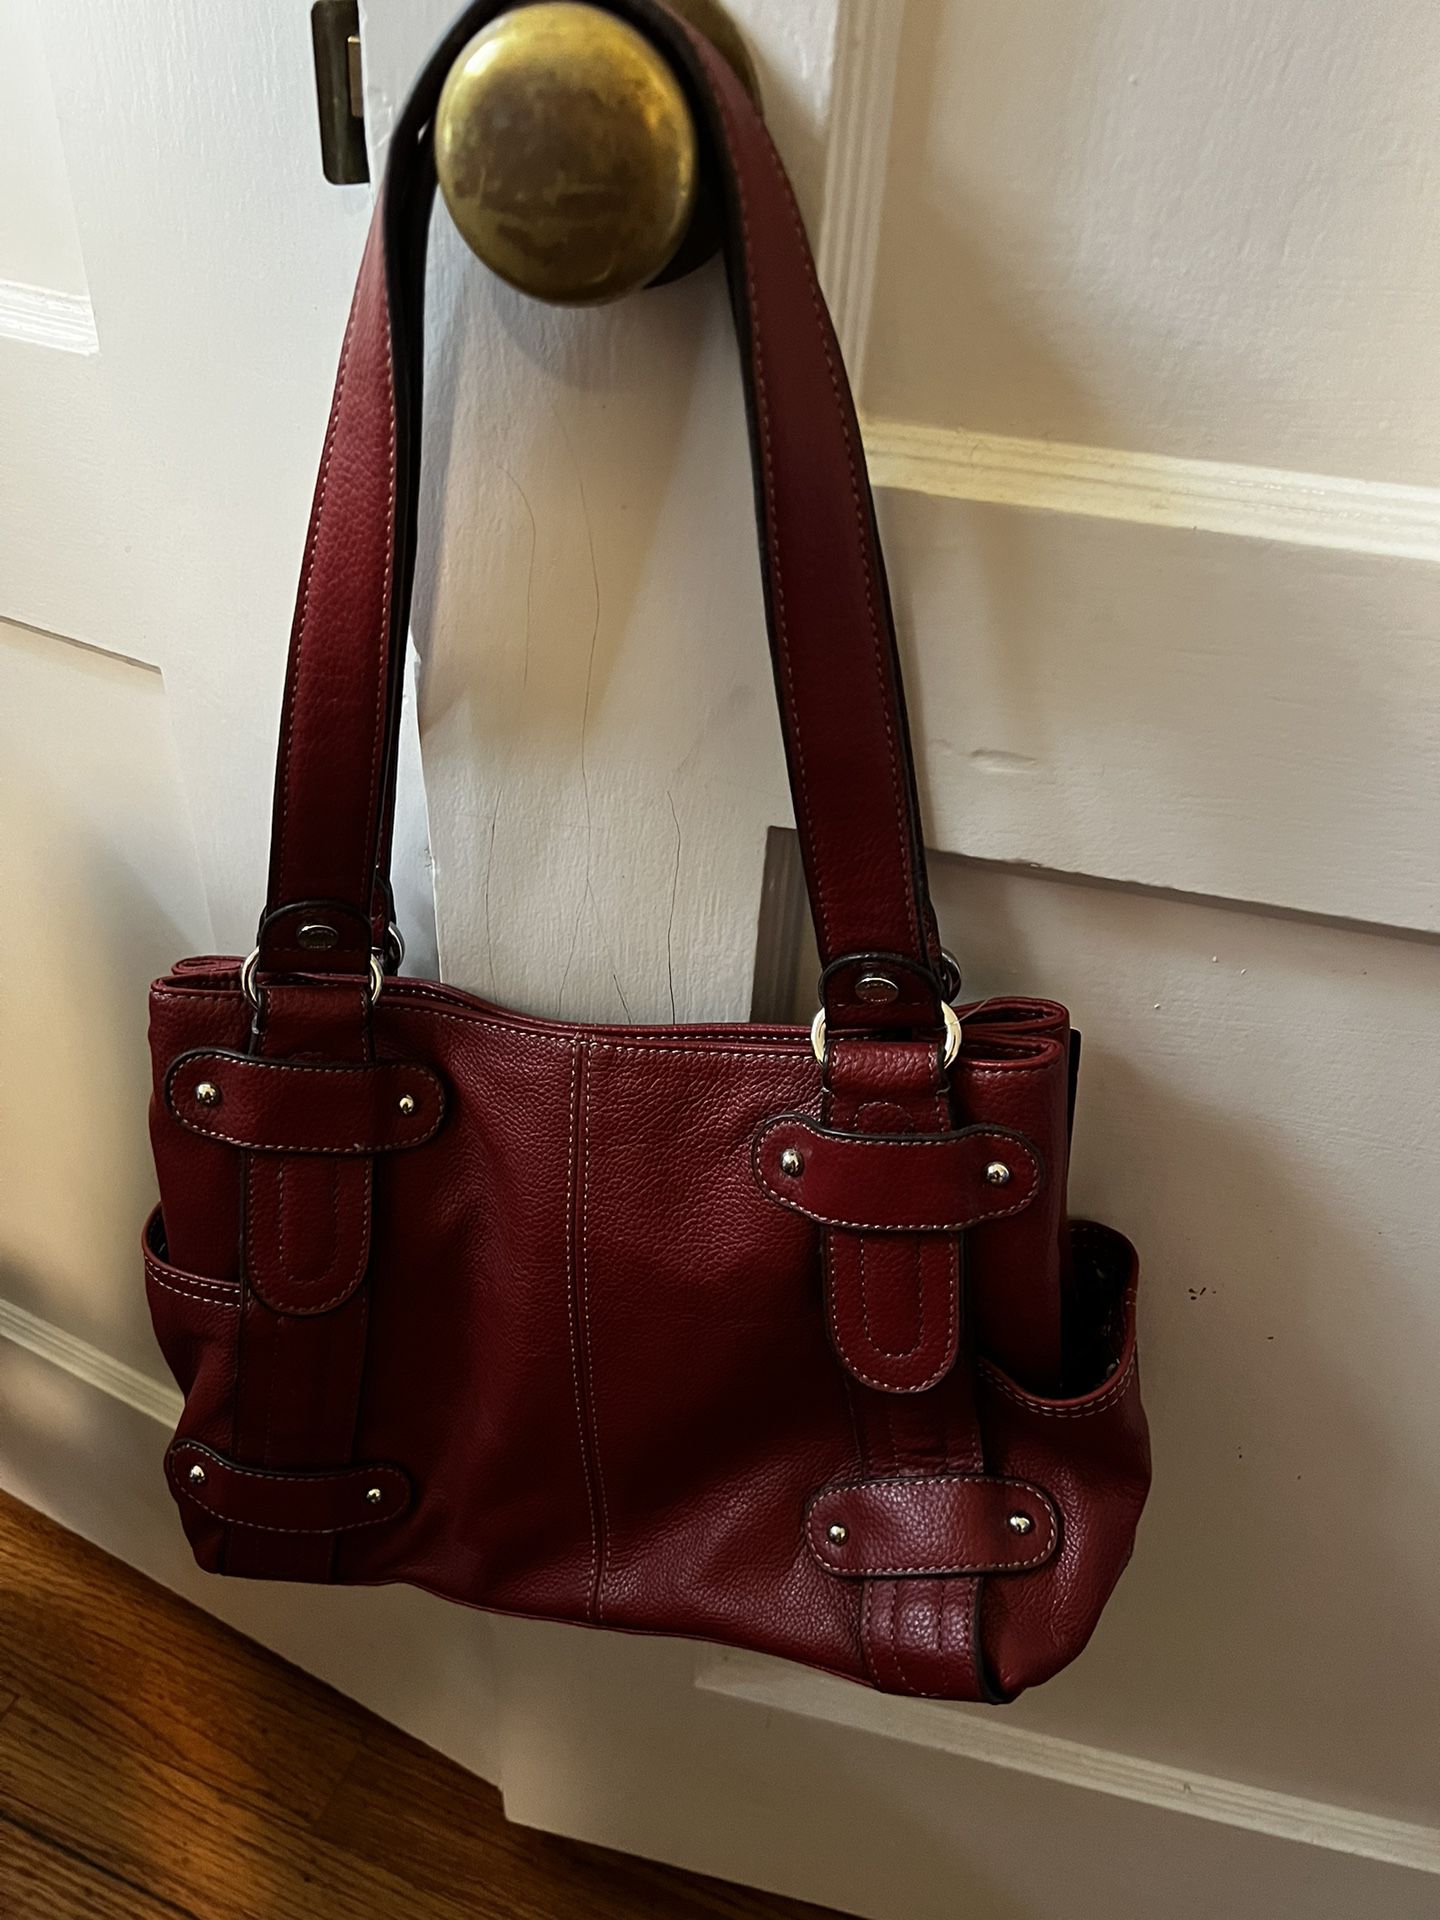 Tignanello Red Genuine Leather Tote Shoulder Bag- Never used 